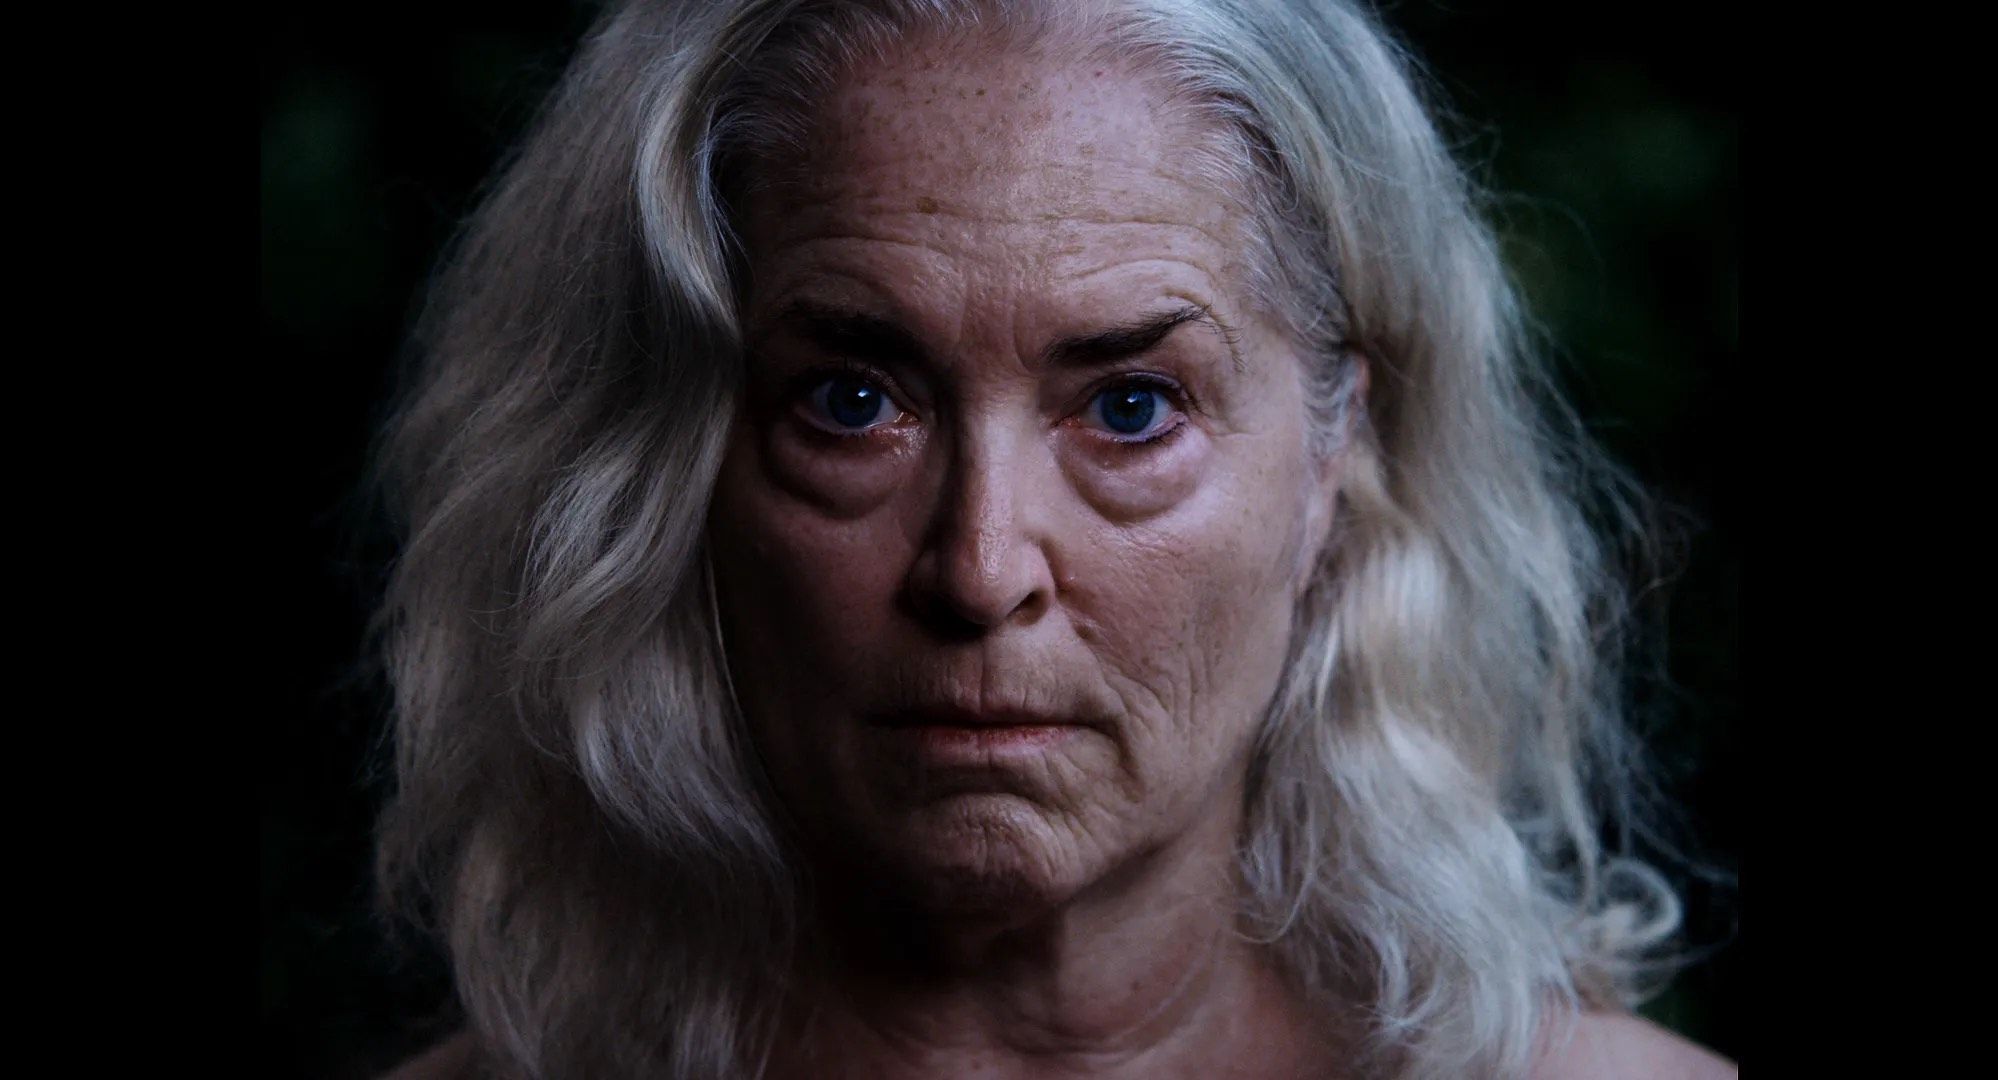 The haunting face of main star, Krisha Fairchild. 